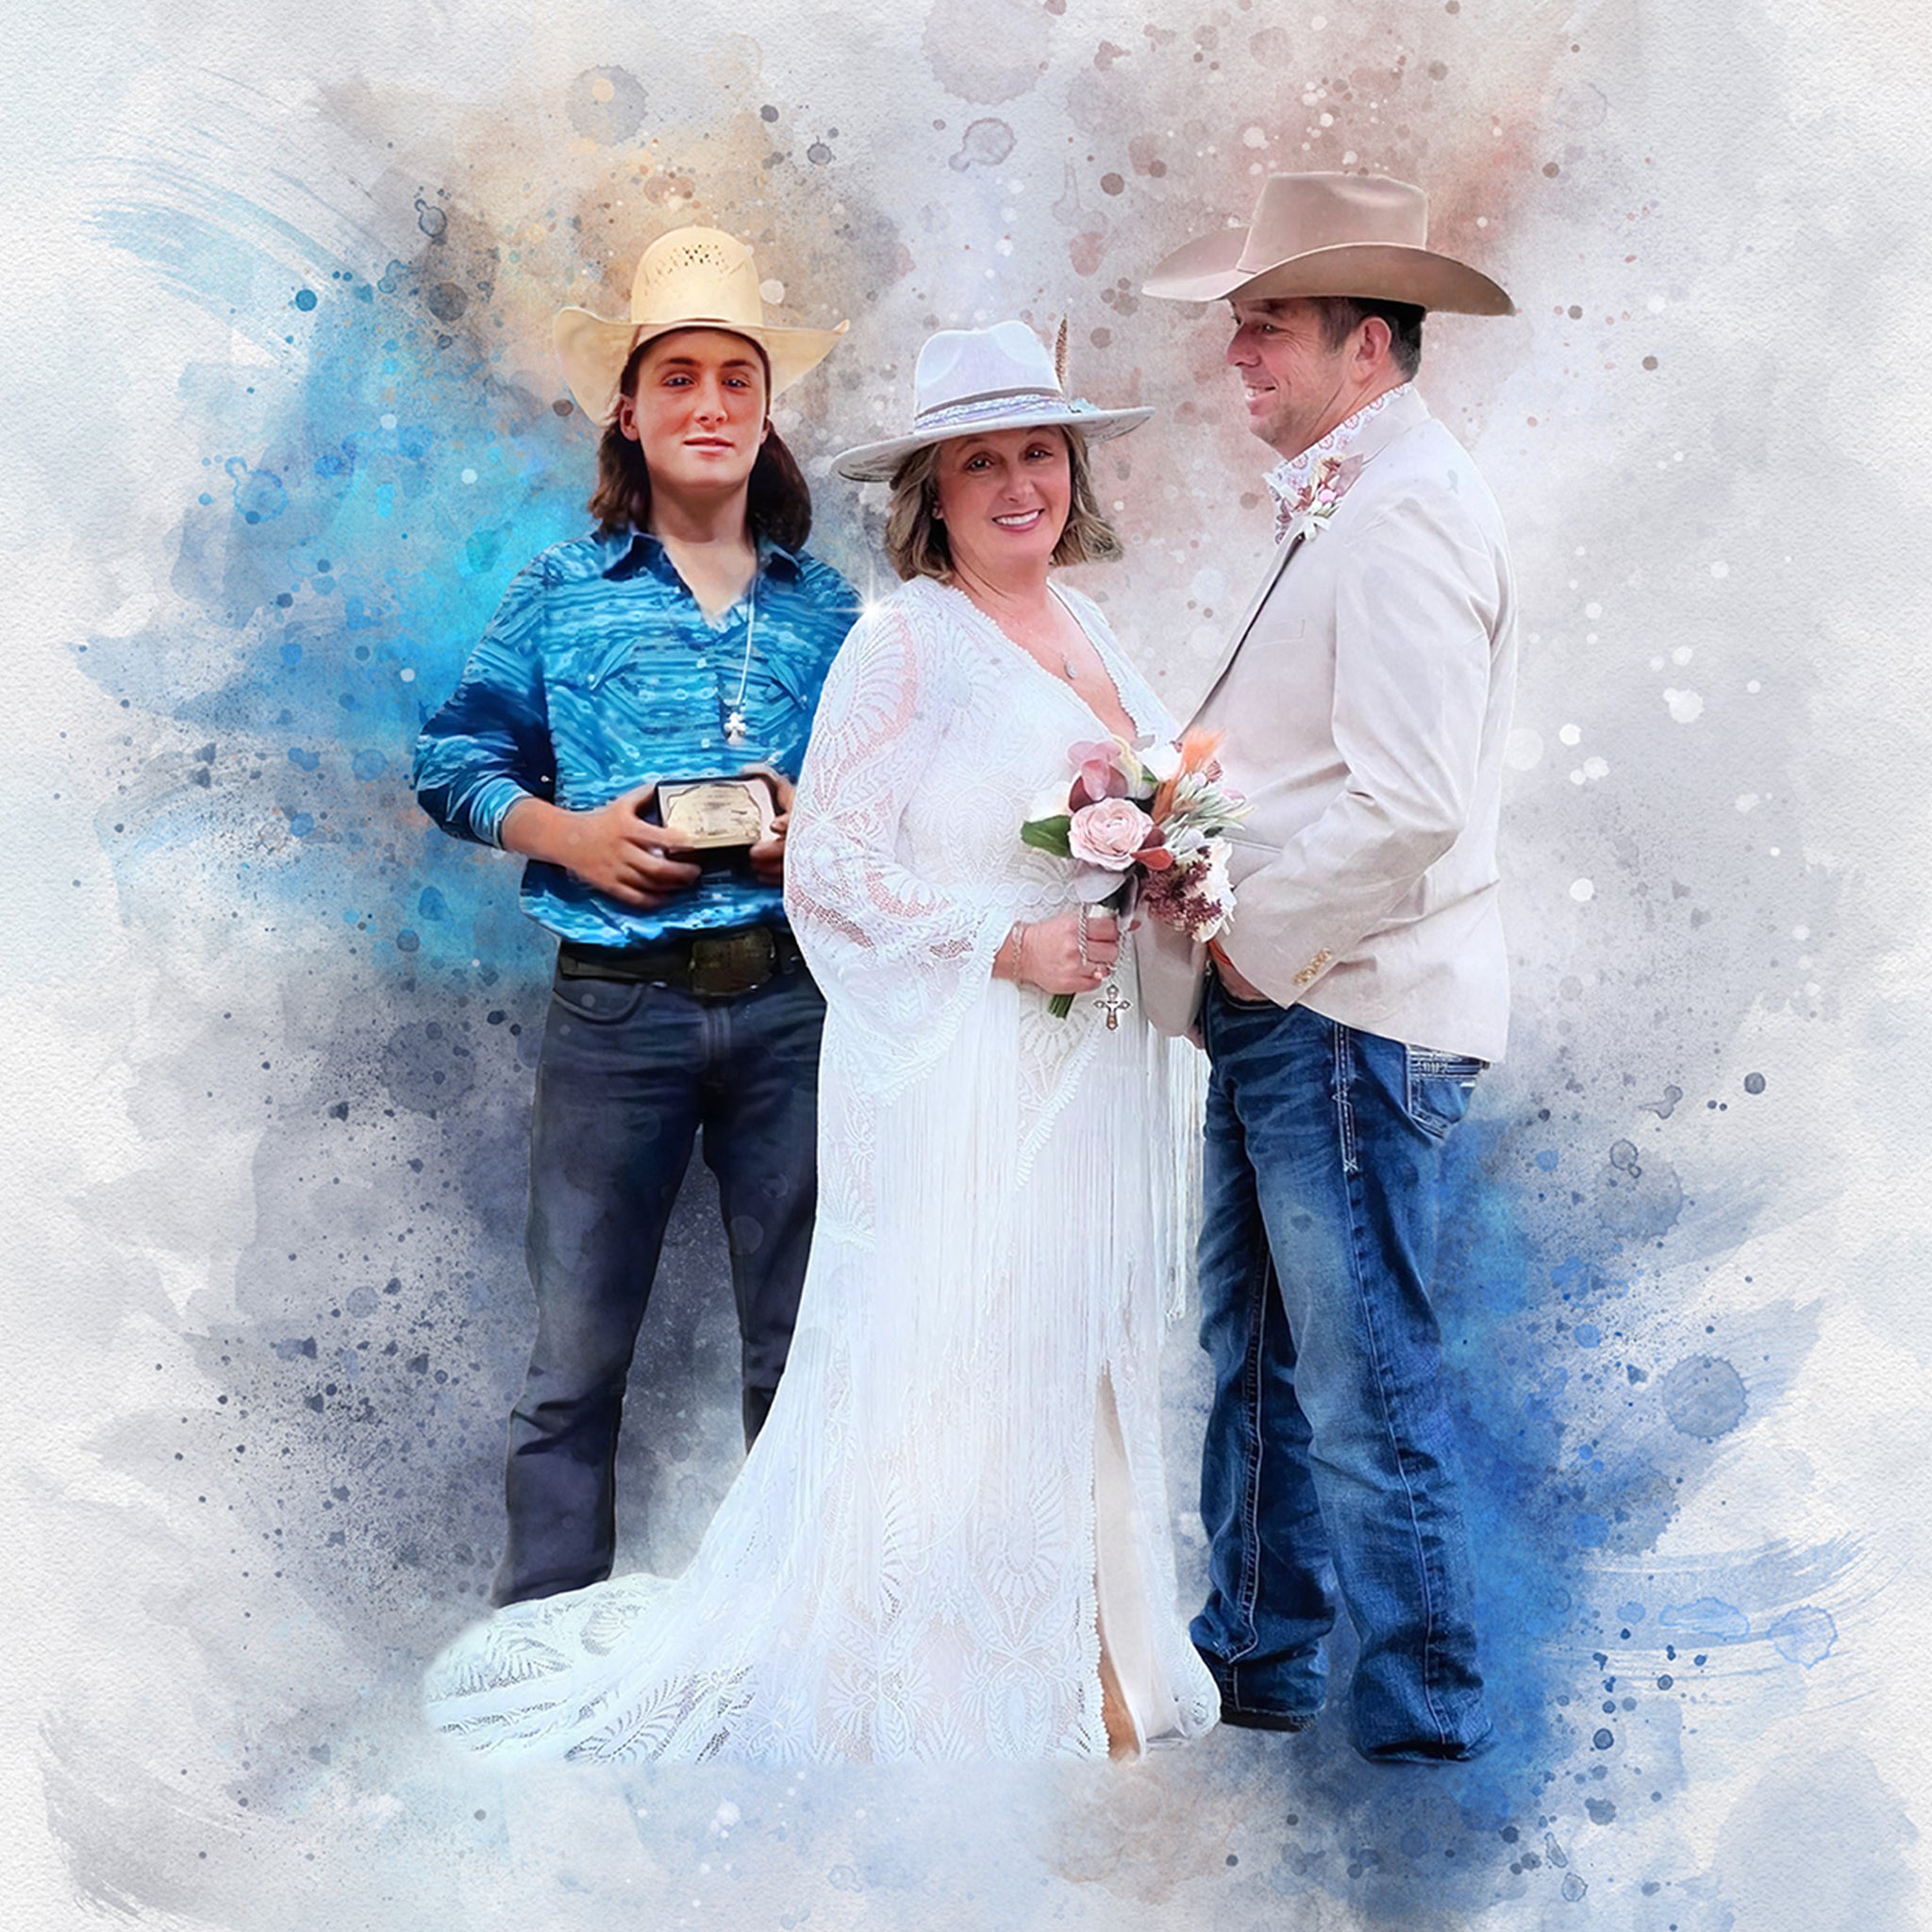 🎻 Barn Wedding Portrait🌻 Rustic Wedding Gift 🌾 Country Wedding 🤠 Farm Wedding Painting from Photo - FromPicToArt